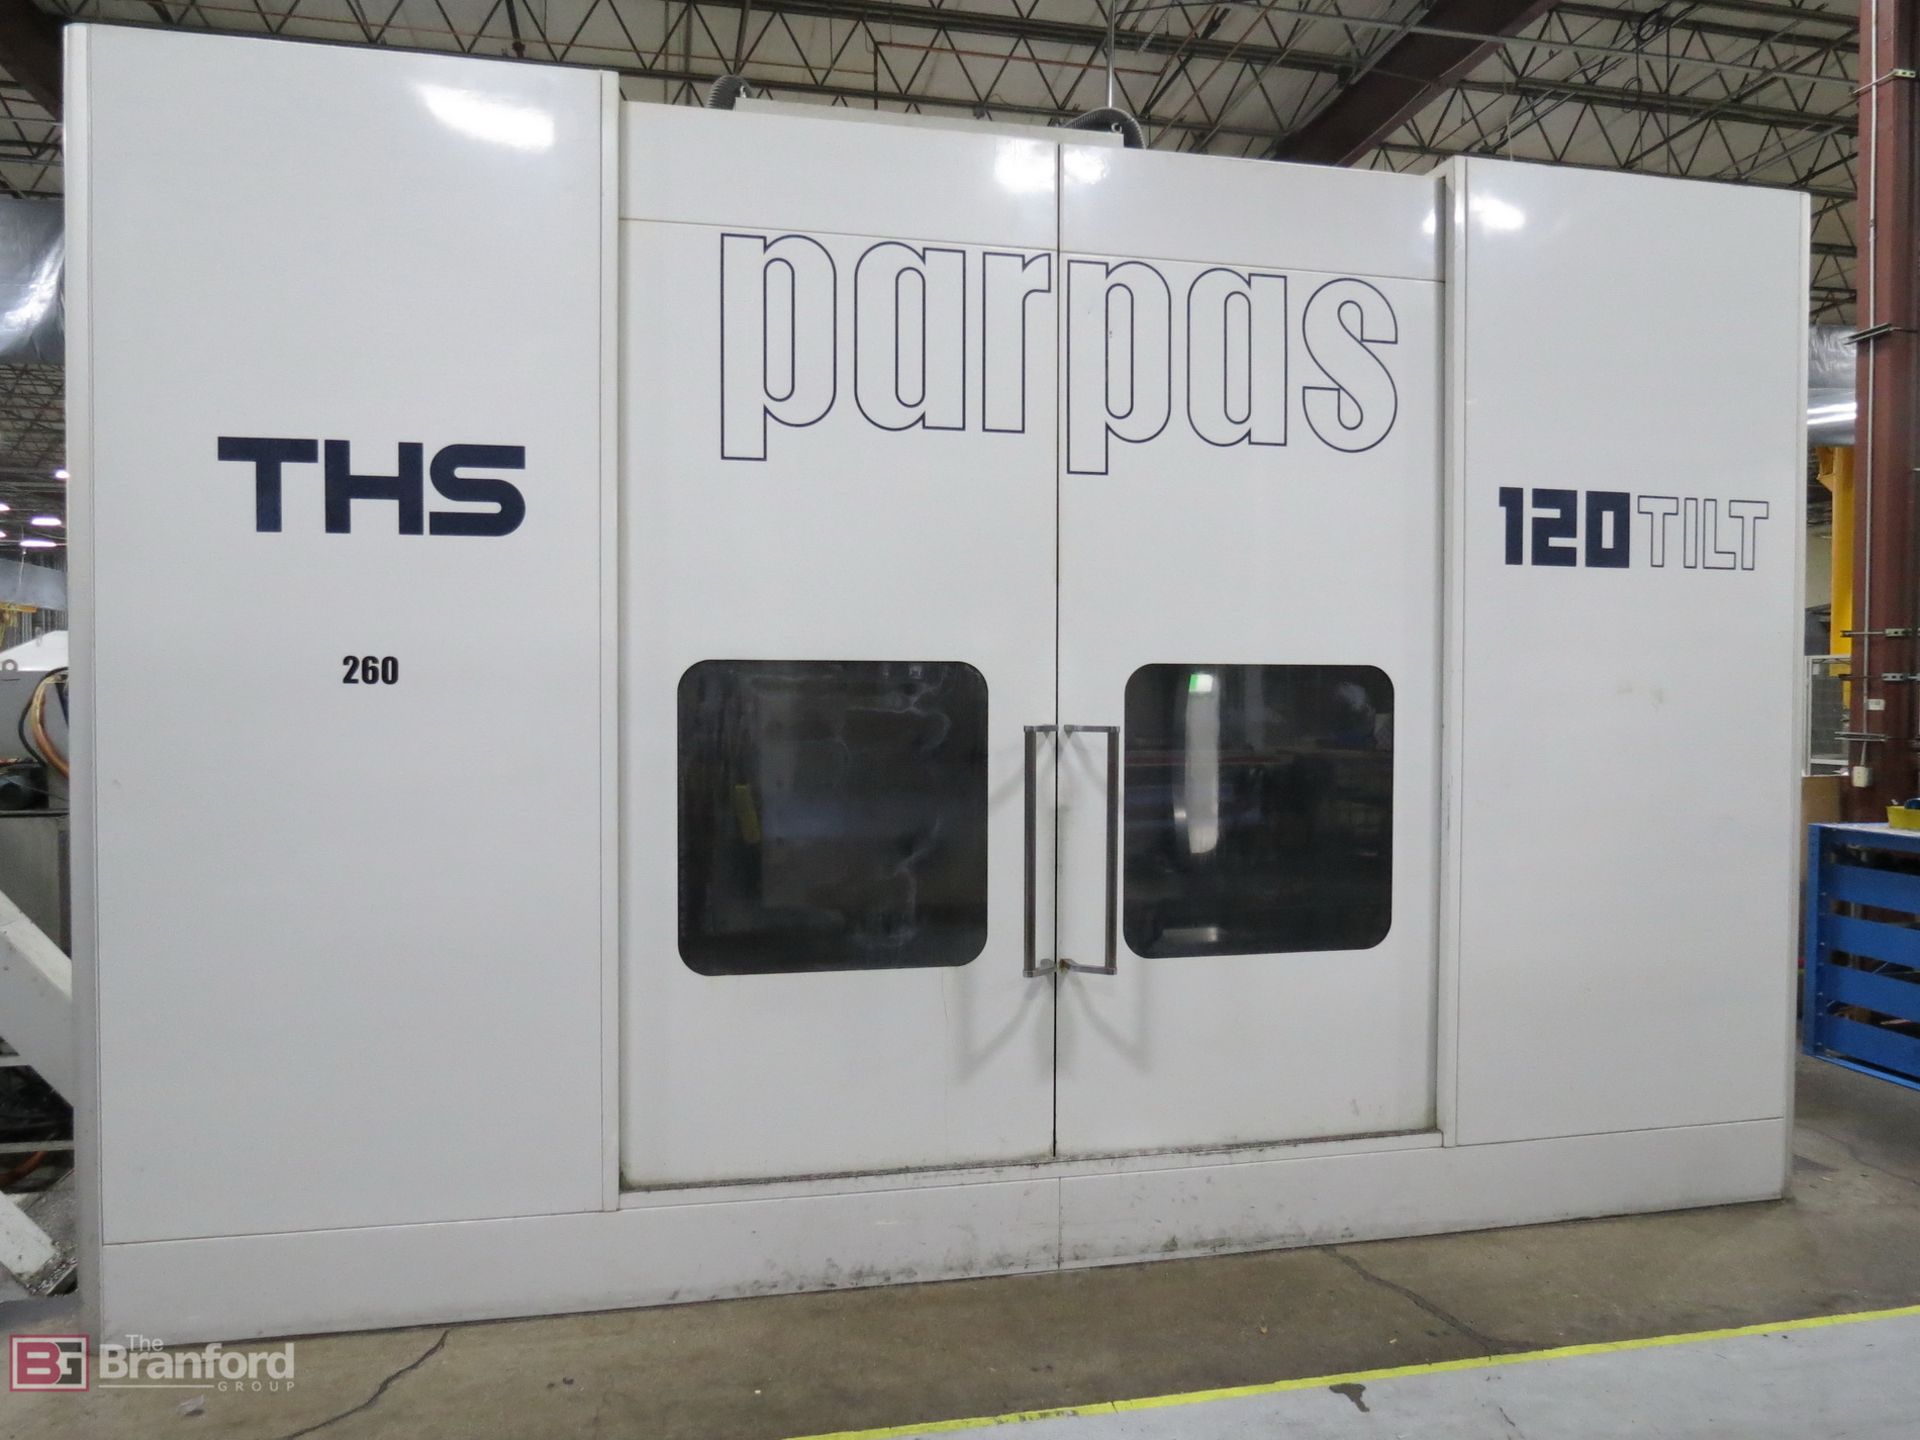 Parpas THS 120 TILT 5-Axis CNC Vertical Machining Center